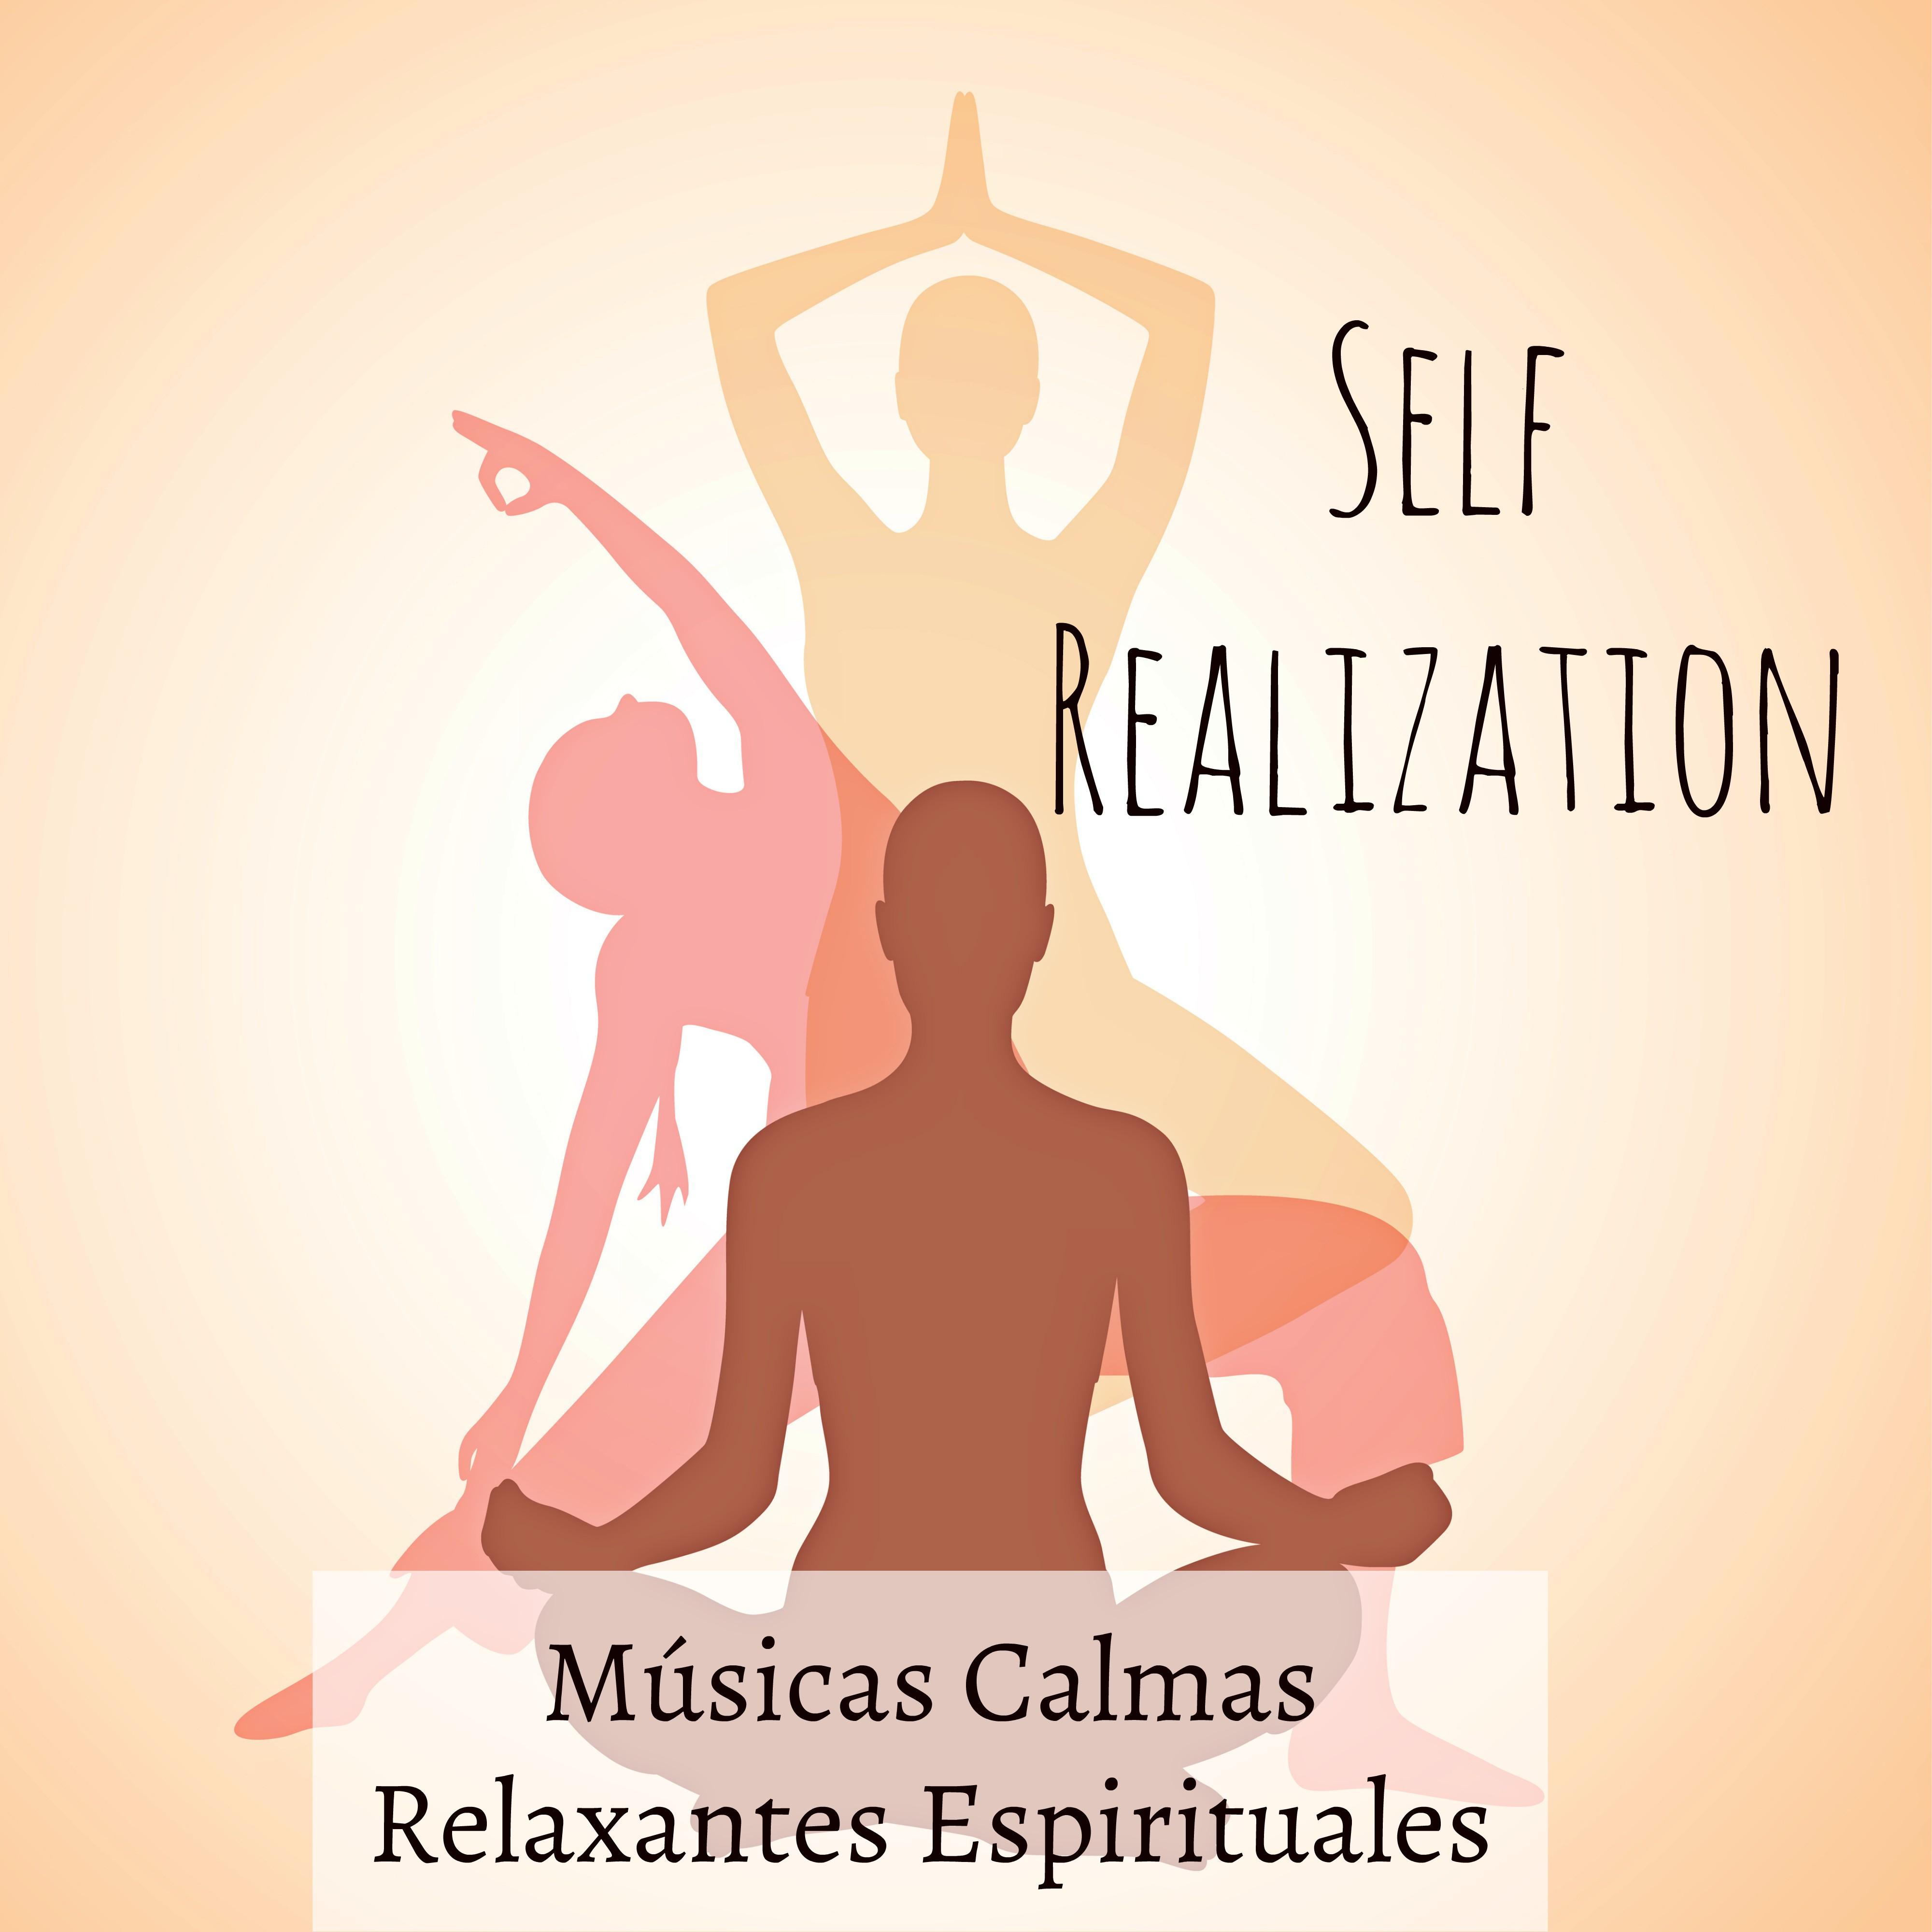 Self Realization - Músicas Calmas Relaxantes Espirituales para Respiração Profunda Yoga Exercicios Ciclo do Sono con Sons Instrumentais New Age